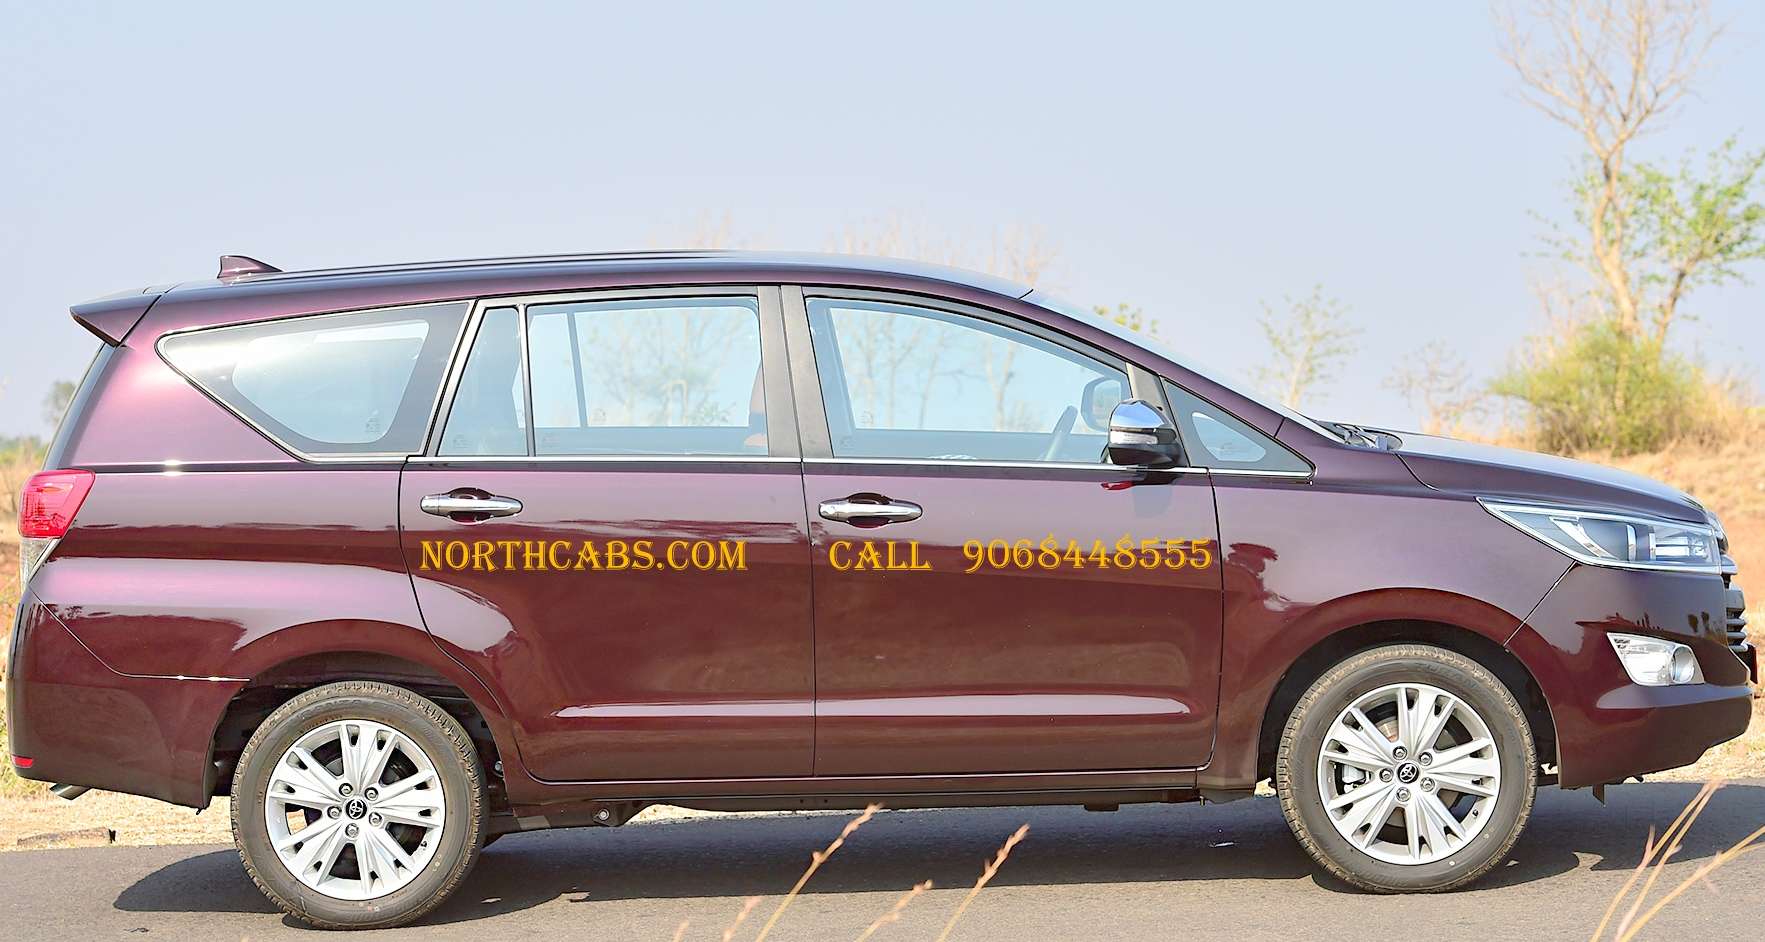 ssNorth cabs Taxi service in Dehradun